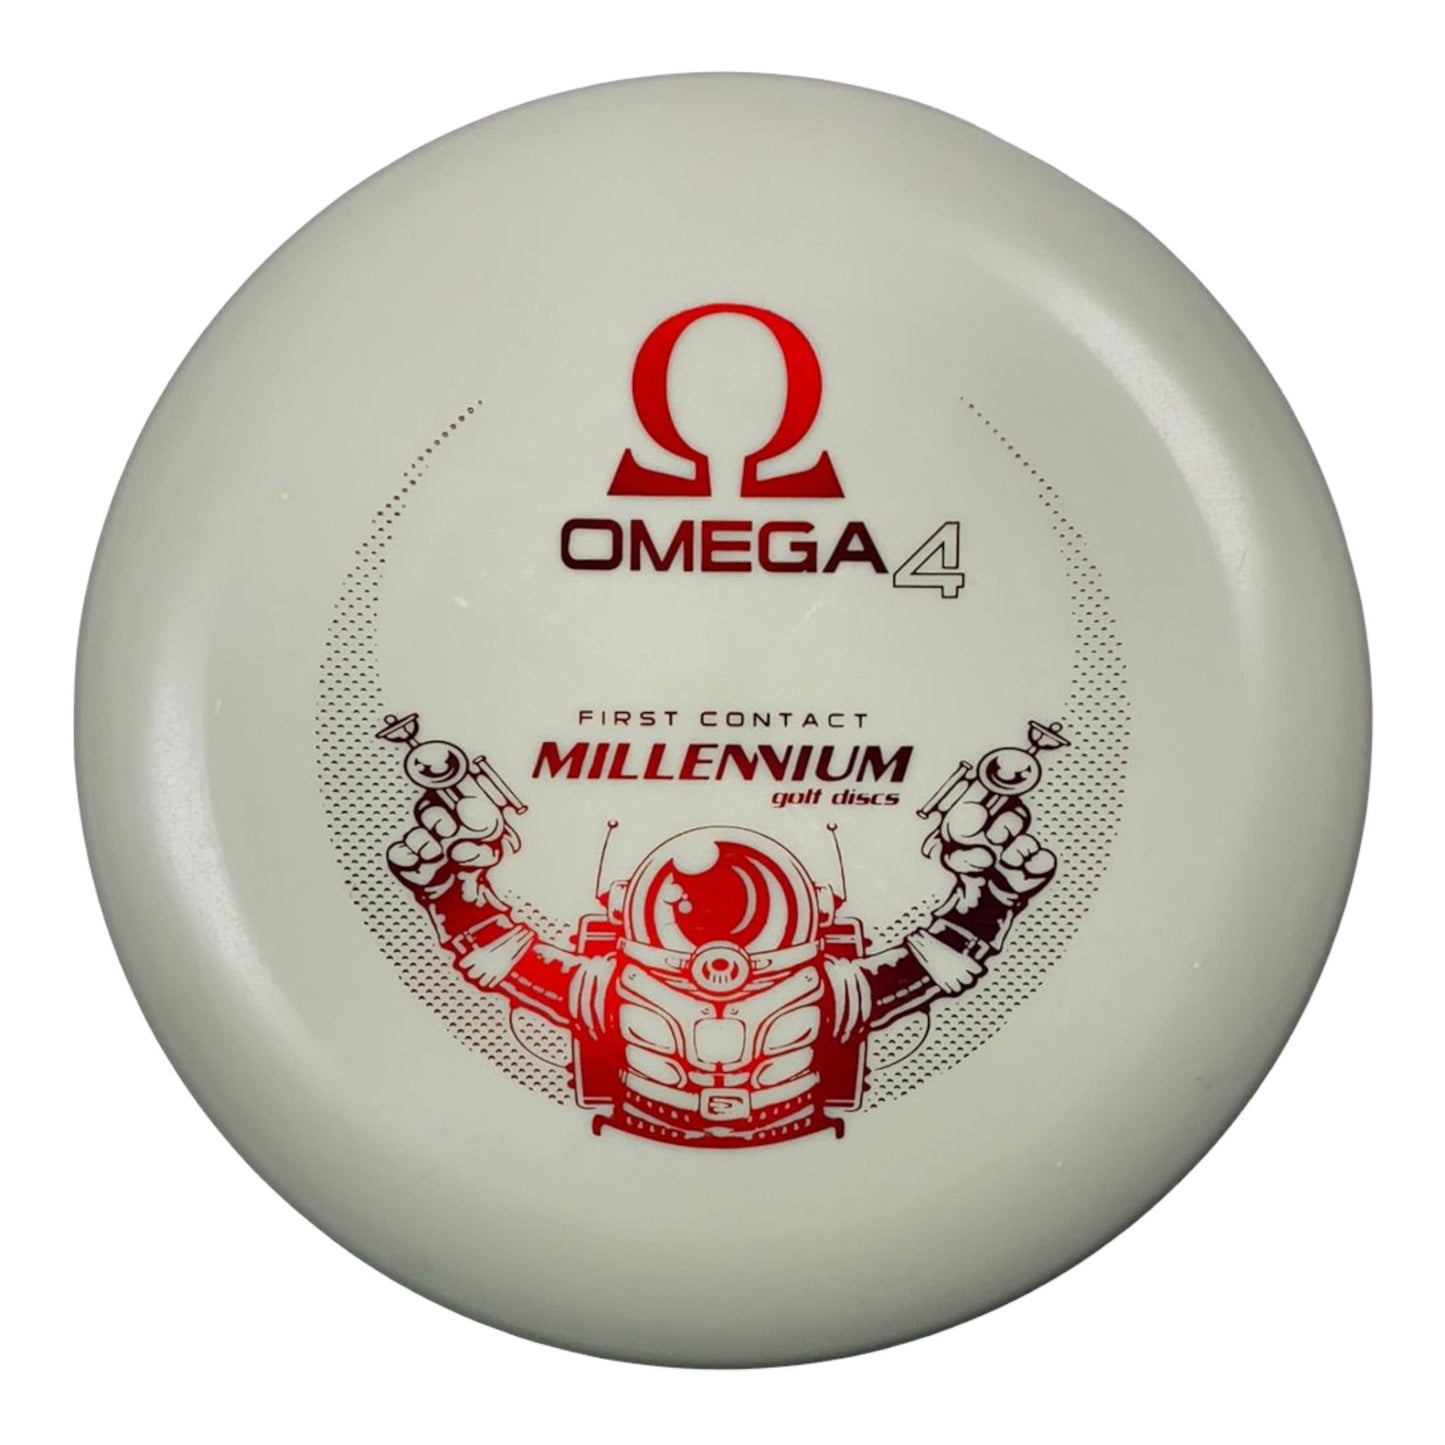 Millennium Golf Discs Omega4 | DT Lunar | White/Red 172g Disc Golf